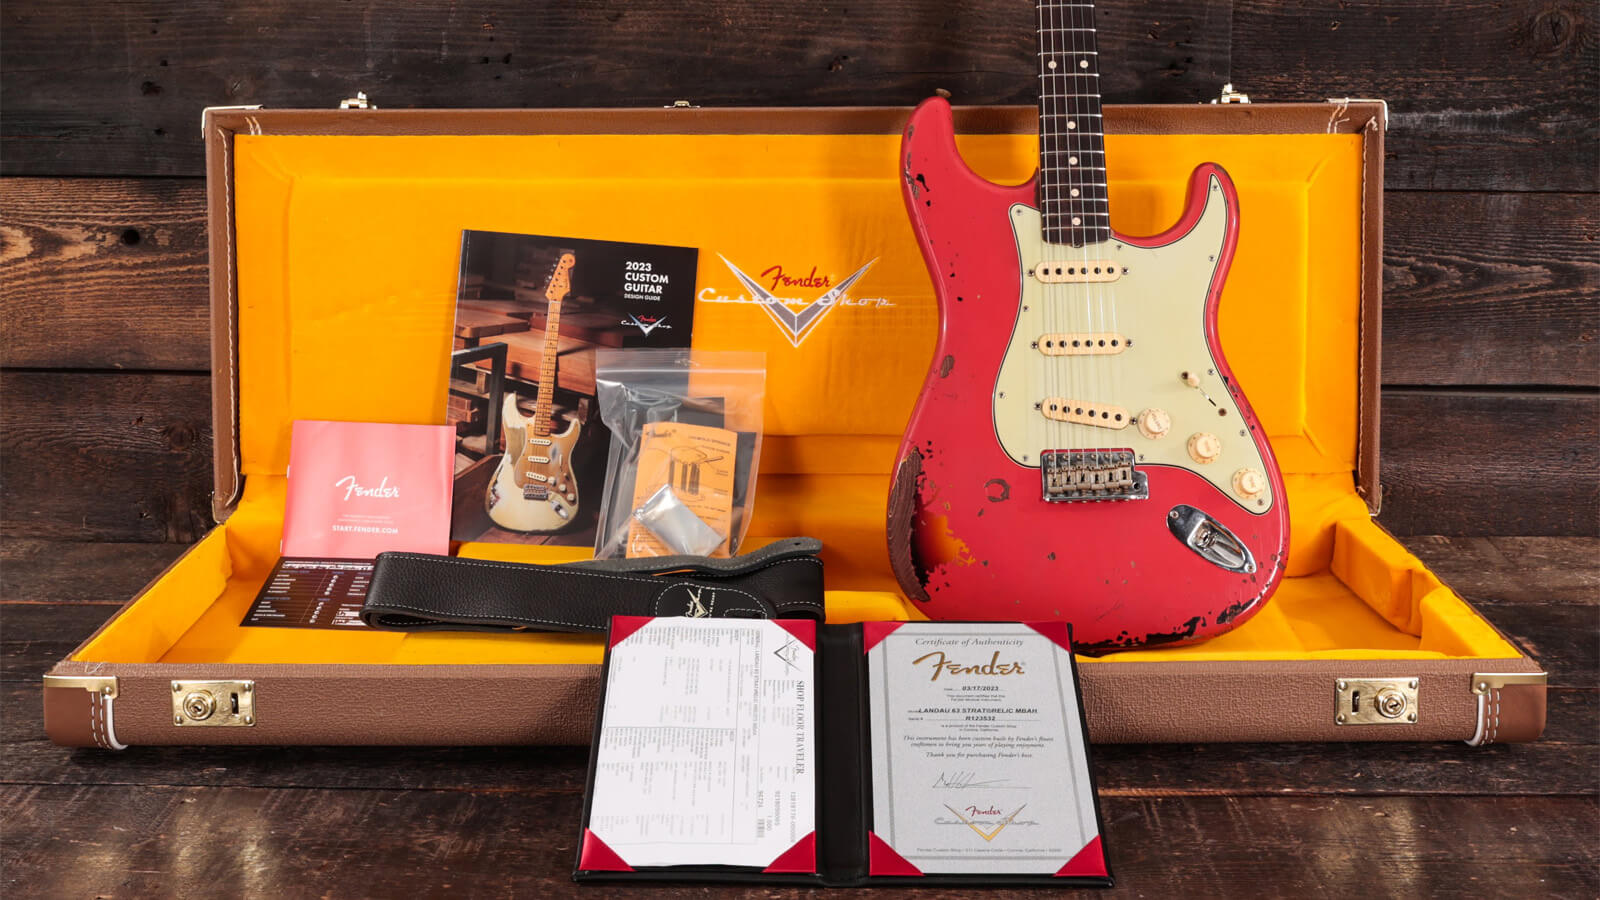   Fender Bundle: Electric Guitar Gear + £10,000